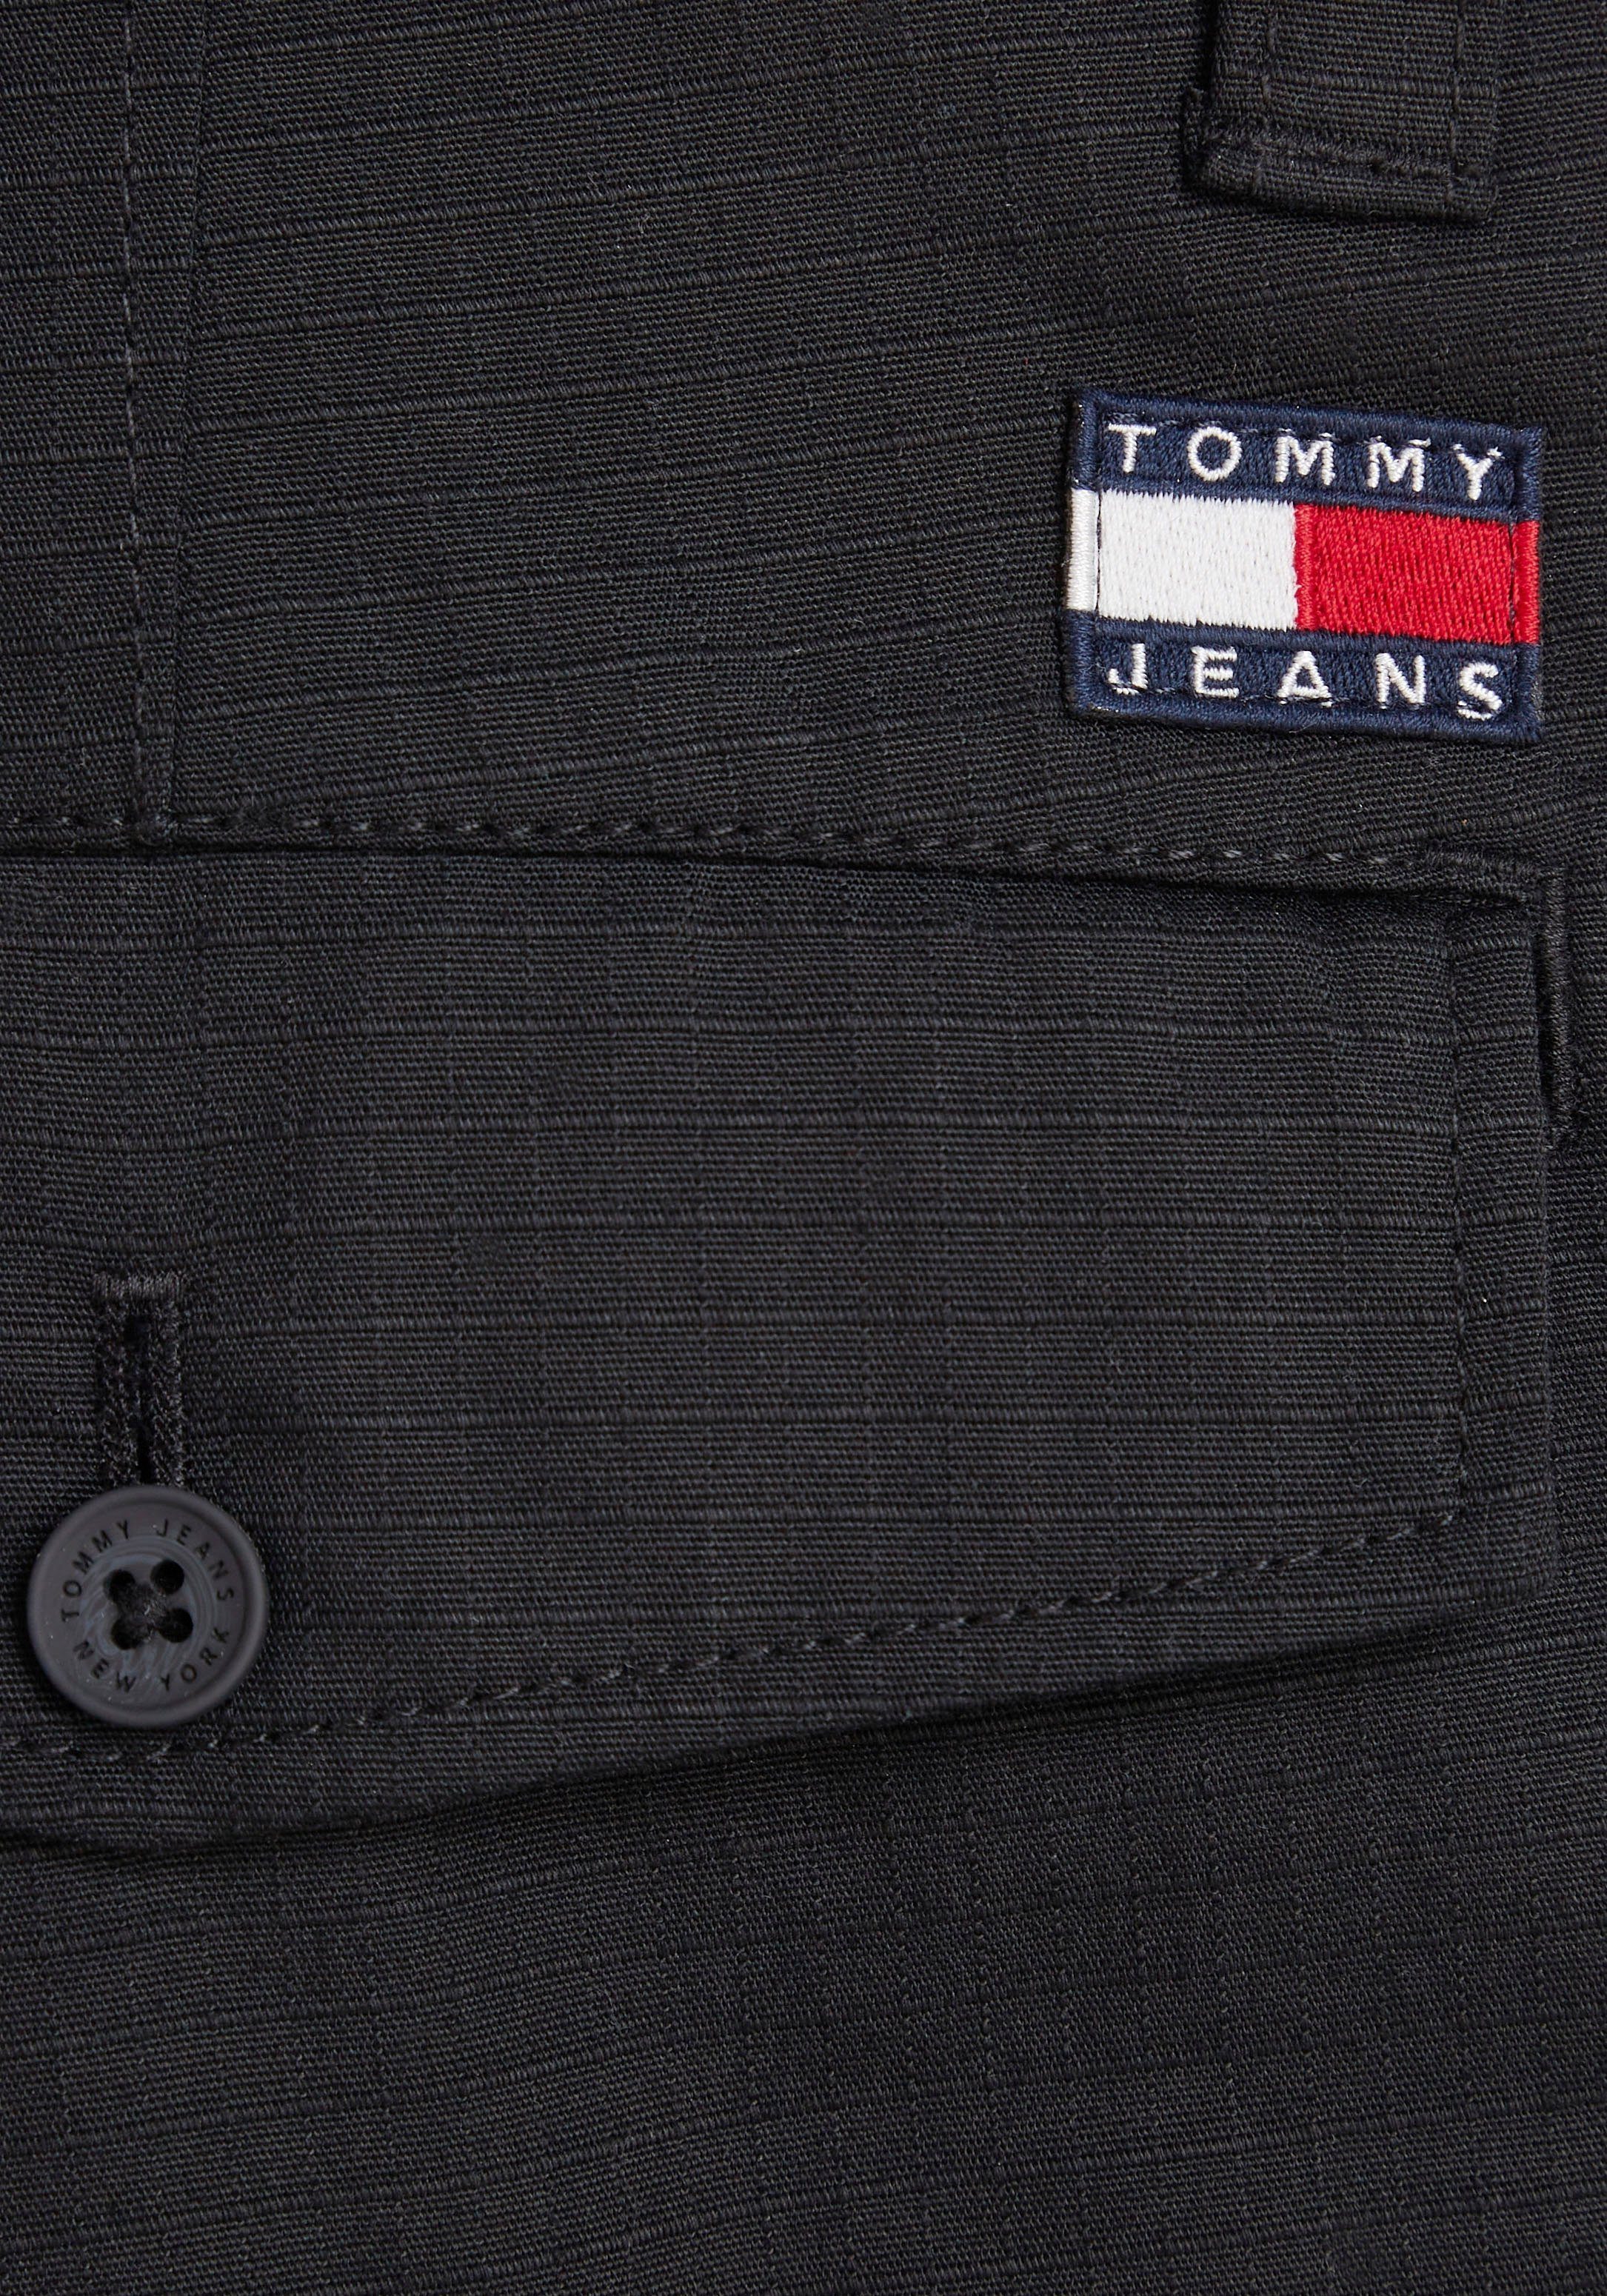 CARGO Struktur BAGGY TJM Stoff feiner im PANT Jeans Cargohose Black mit AIDEN Tommy